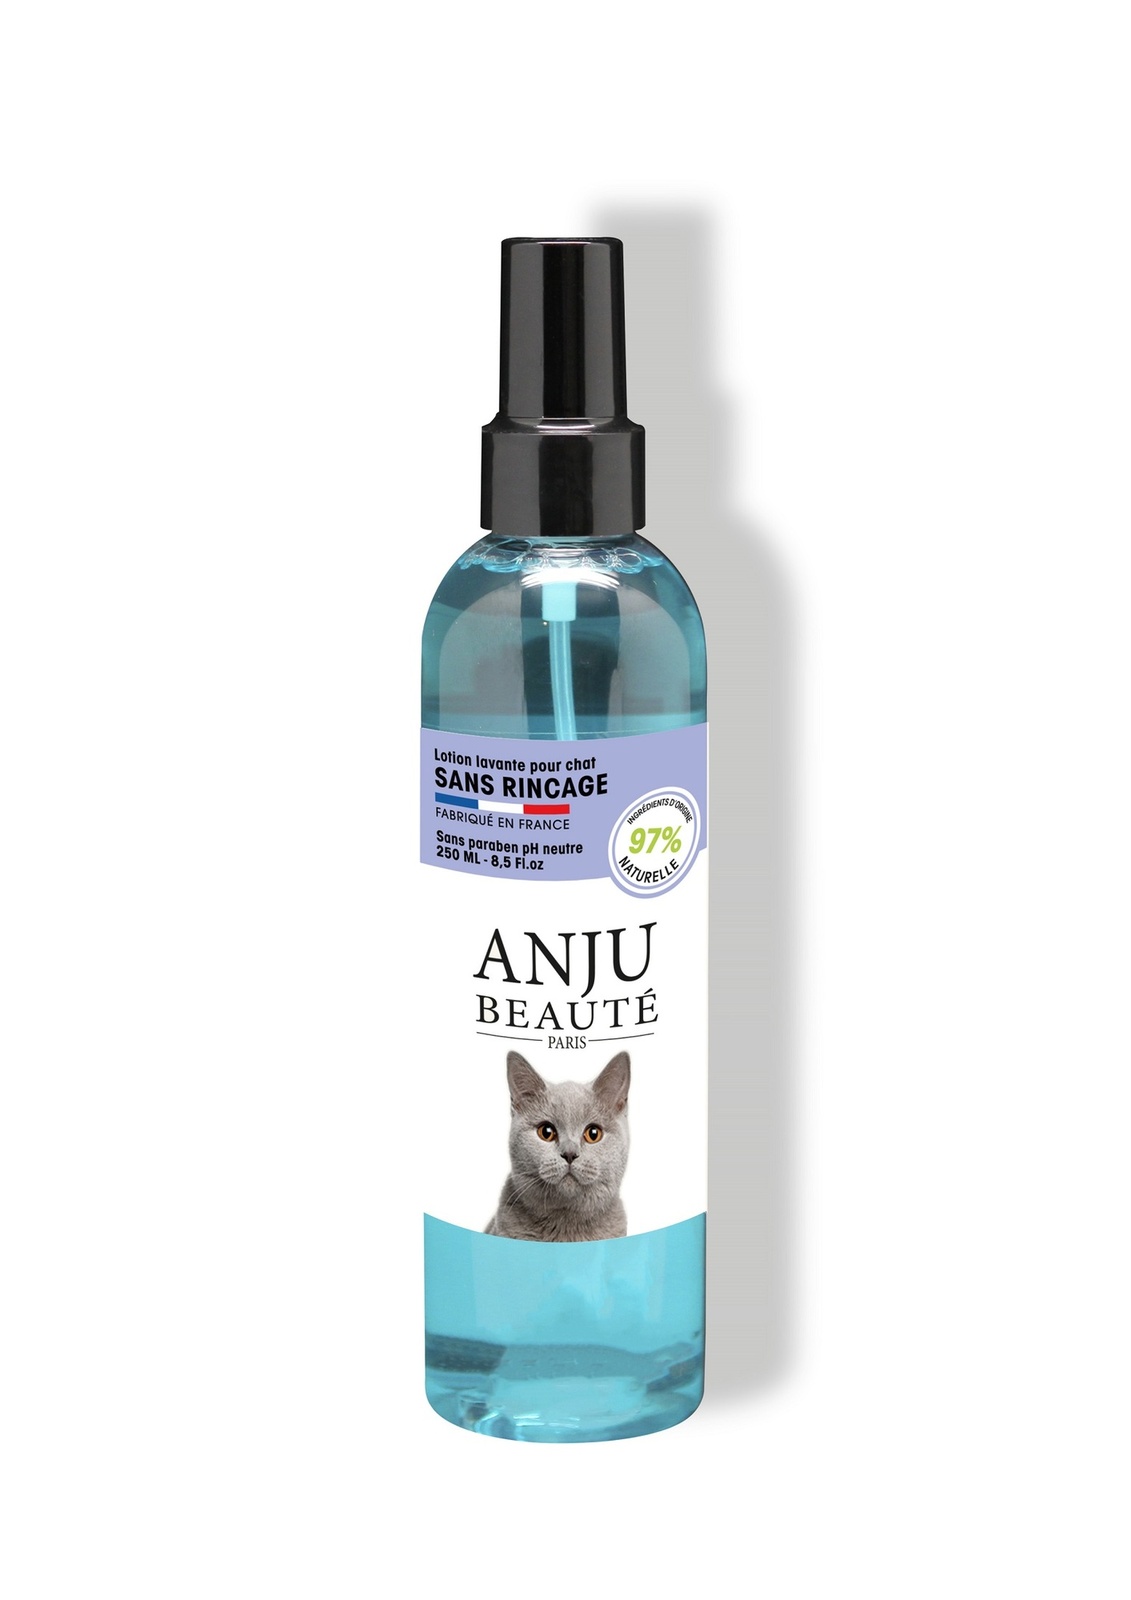 Anju Beaute Anju Beaute очищающий спрей для кошек без ополаскивания, 250 мл (250 г) anju beaute anju beaute спрей для кошек для распутывания шерсти 250 мл 250 г